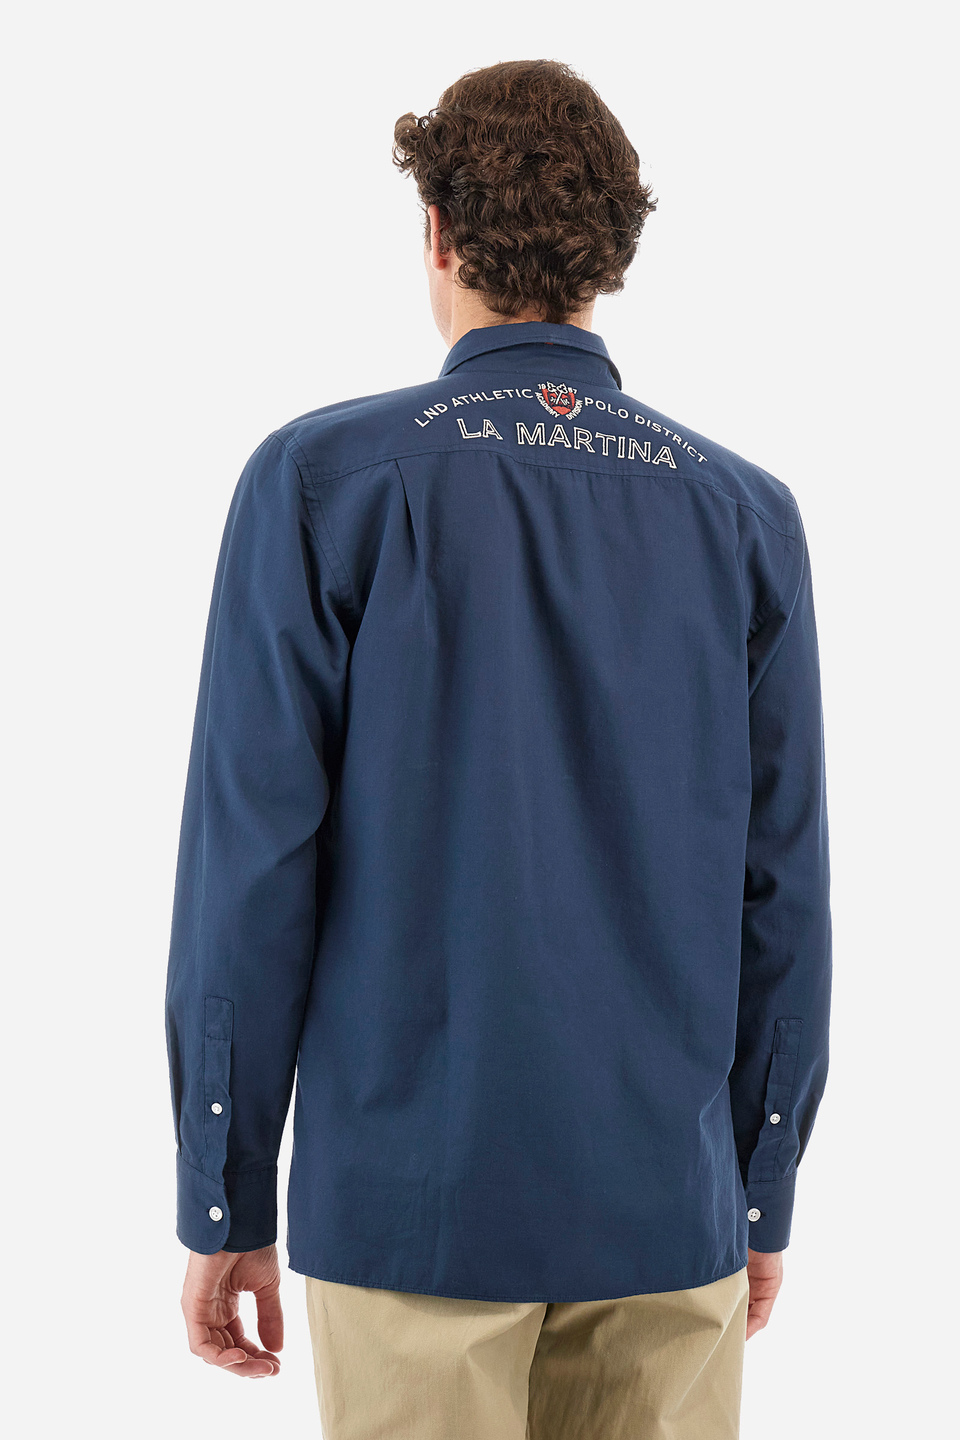 Camicia da uomo regular fit - Yamino | La Martina - Official Online Shop